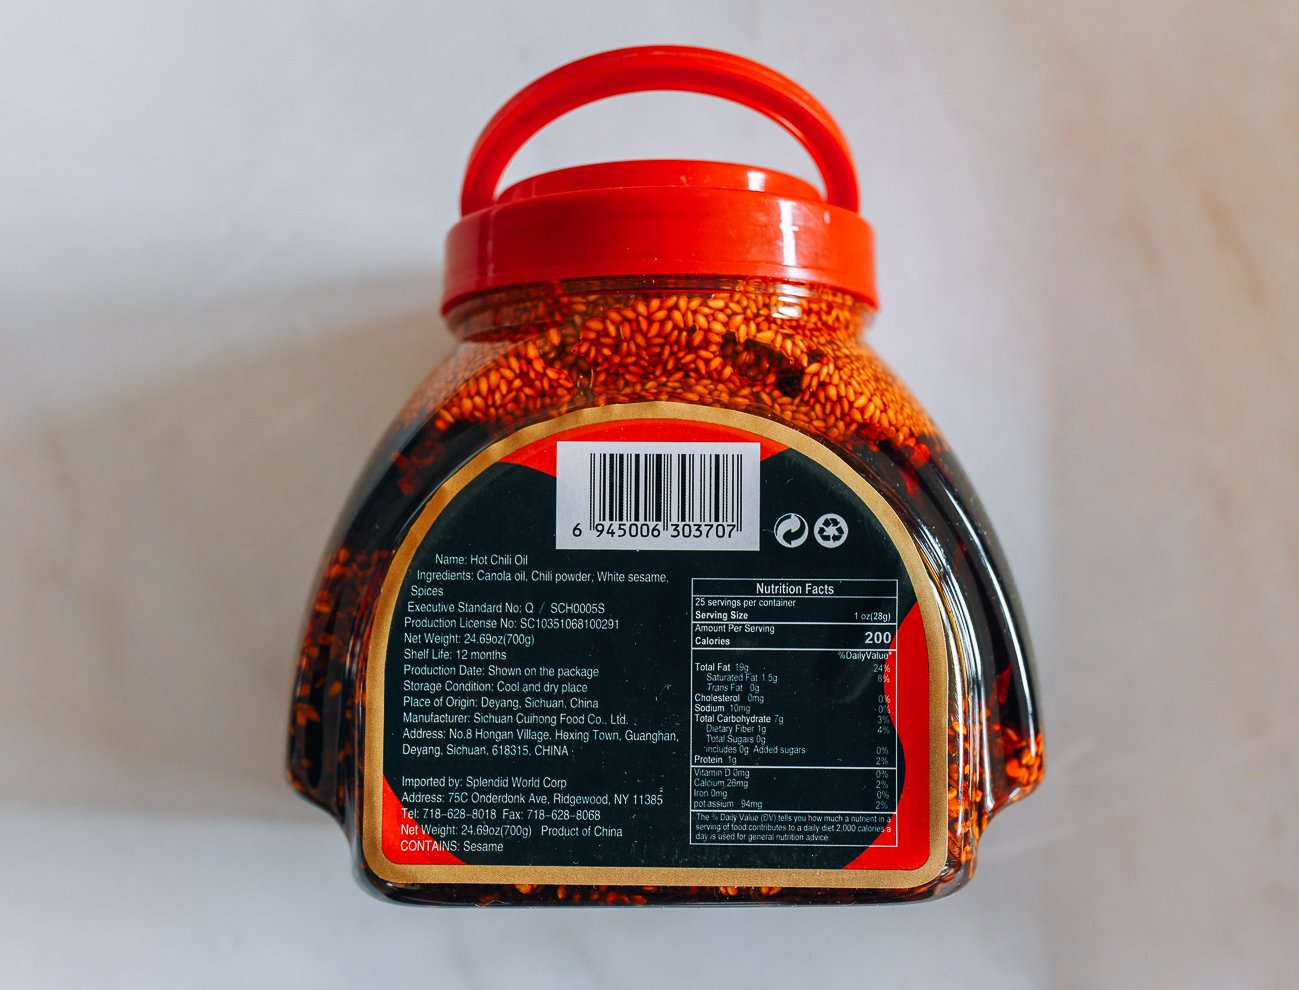 Szechuan Flavor Hot Chili Oil Ingredients